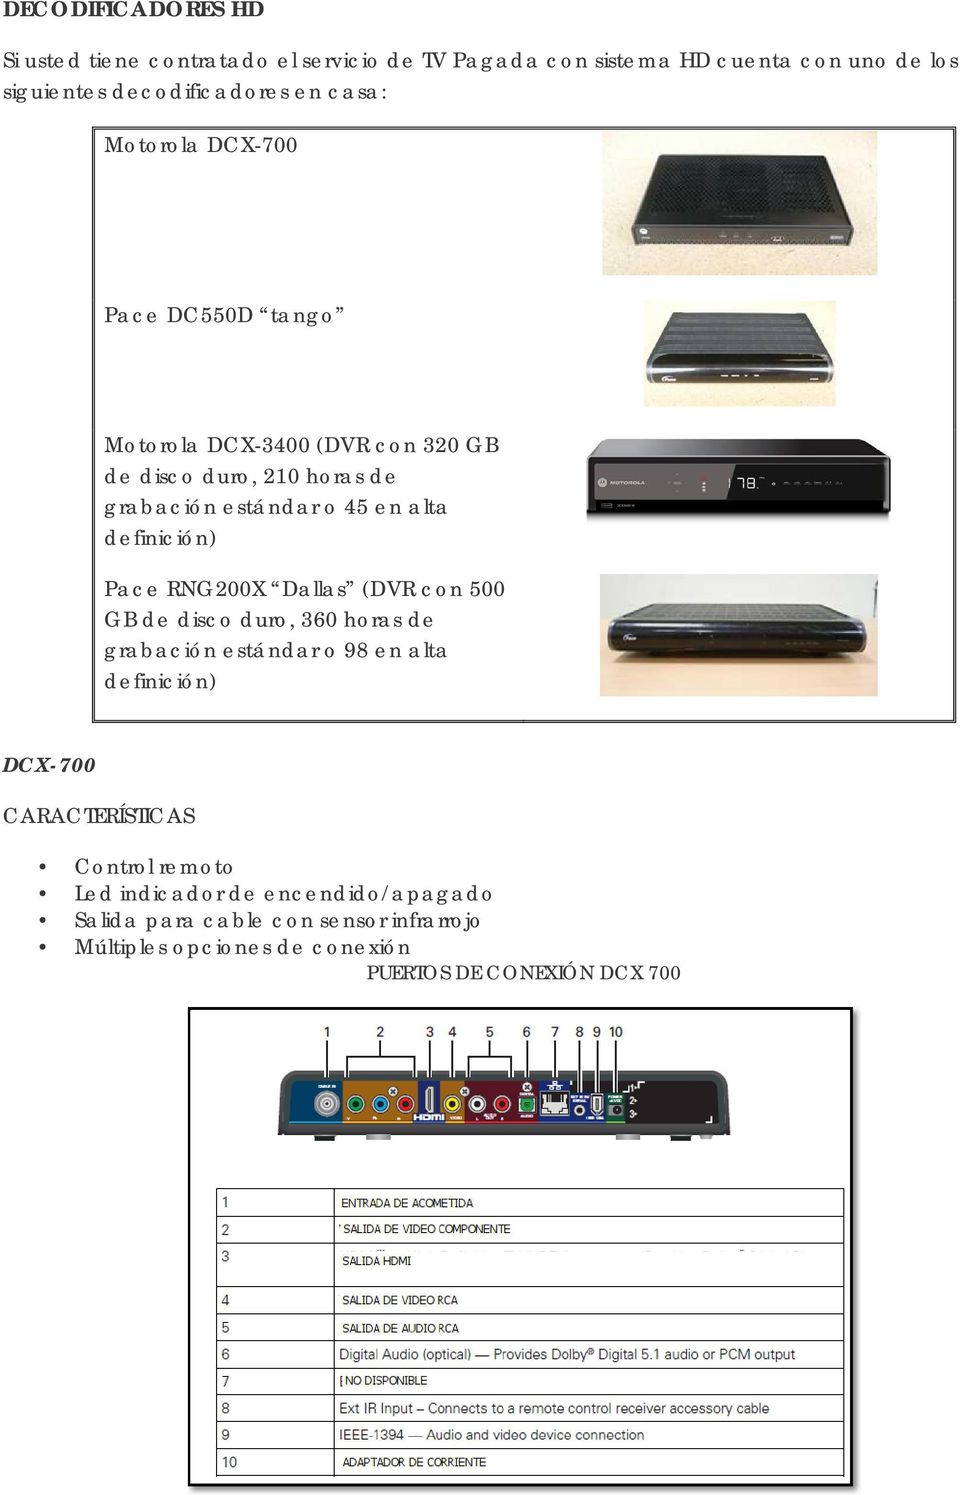 definición) Pace RNG200X Dallas (DVR con 500 GB de disco duro, 360 horas de grabación estándar o 98 en alta definición) DCX-700